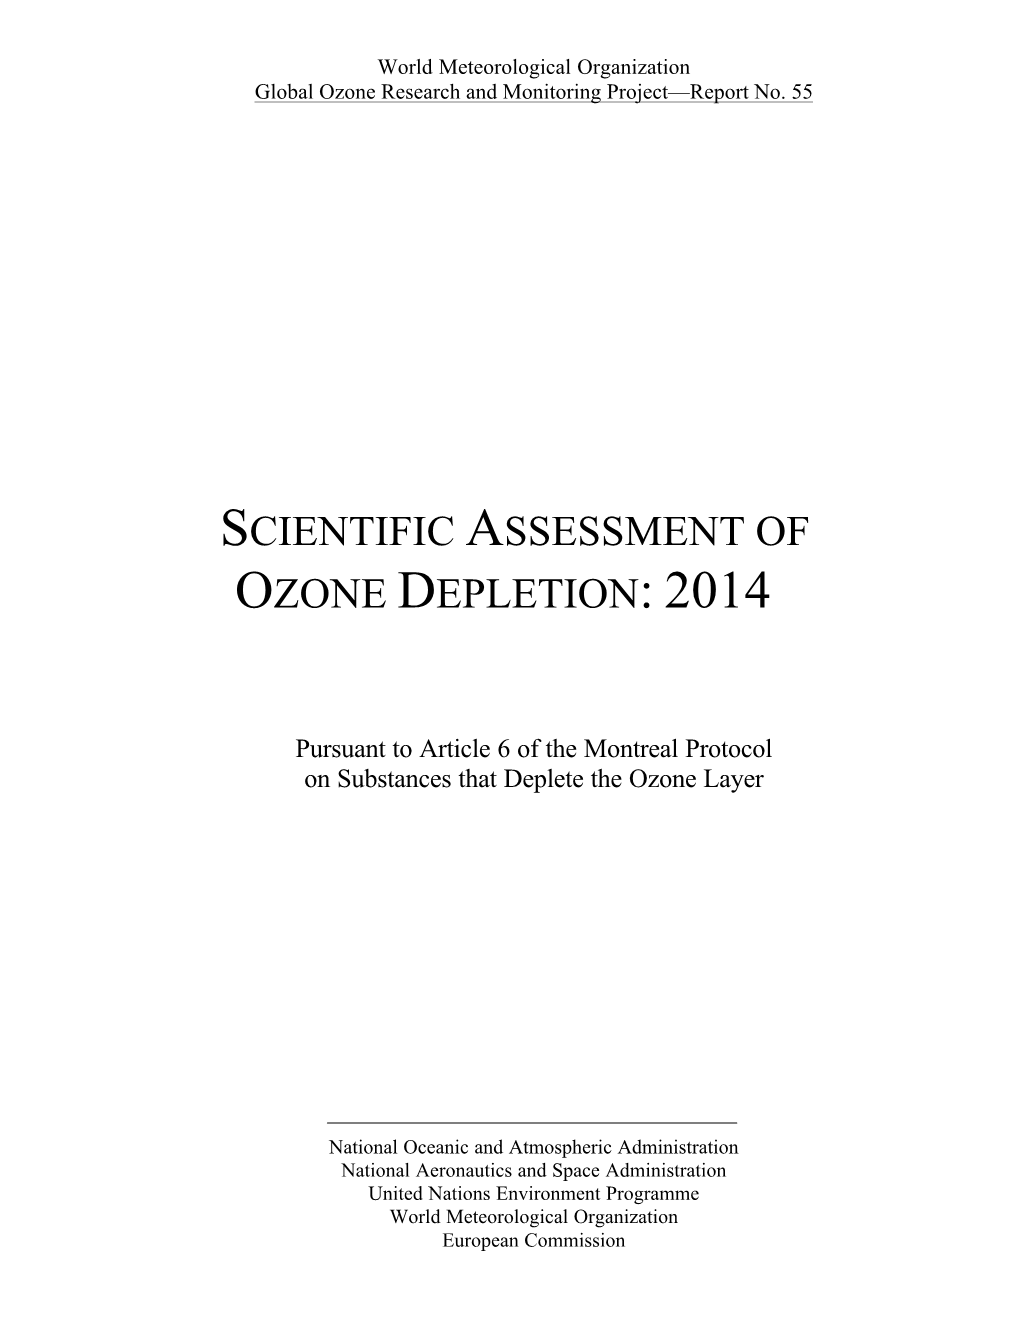 Scientific Assessment of Ozone Depletion: 2014